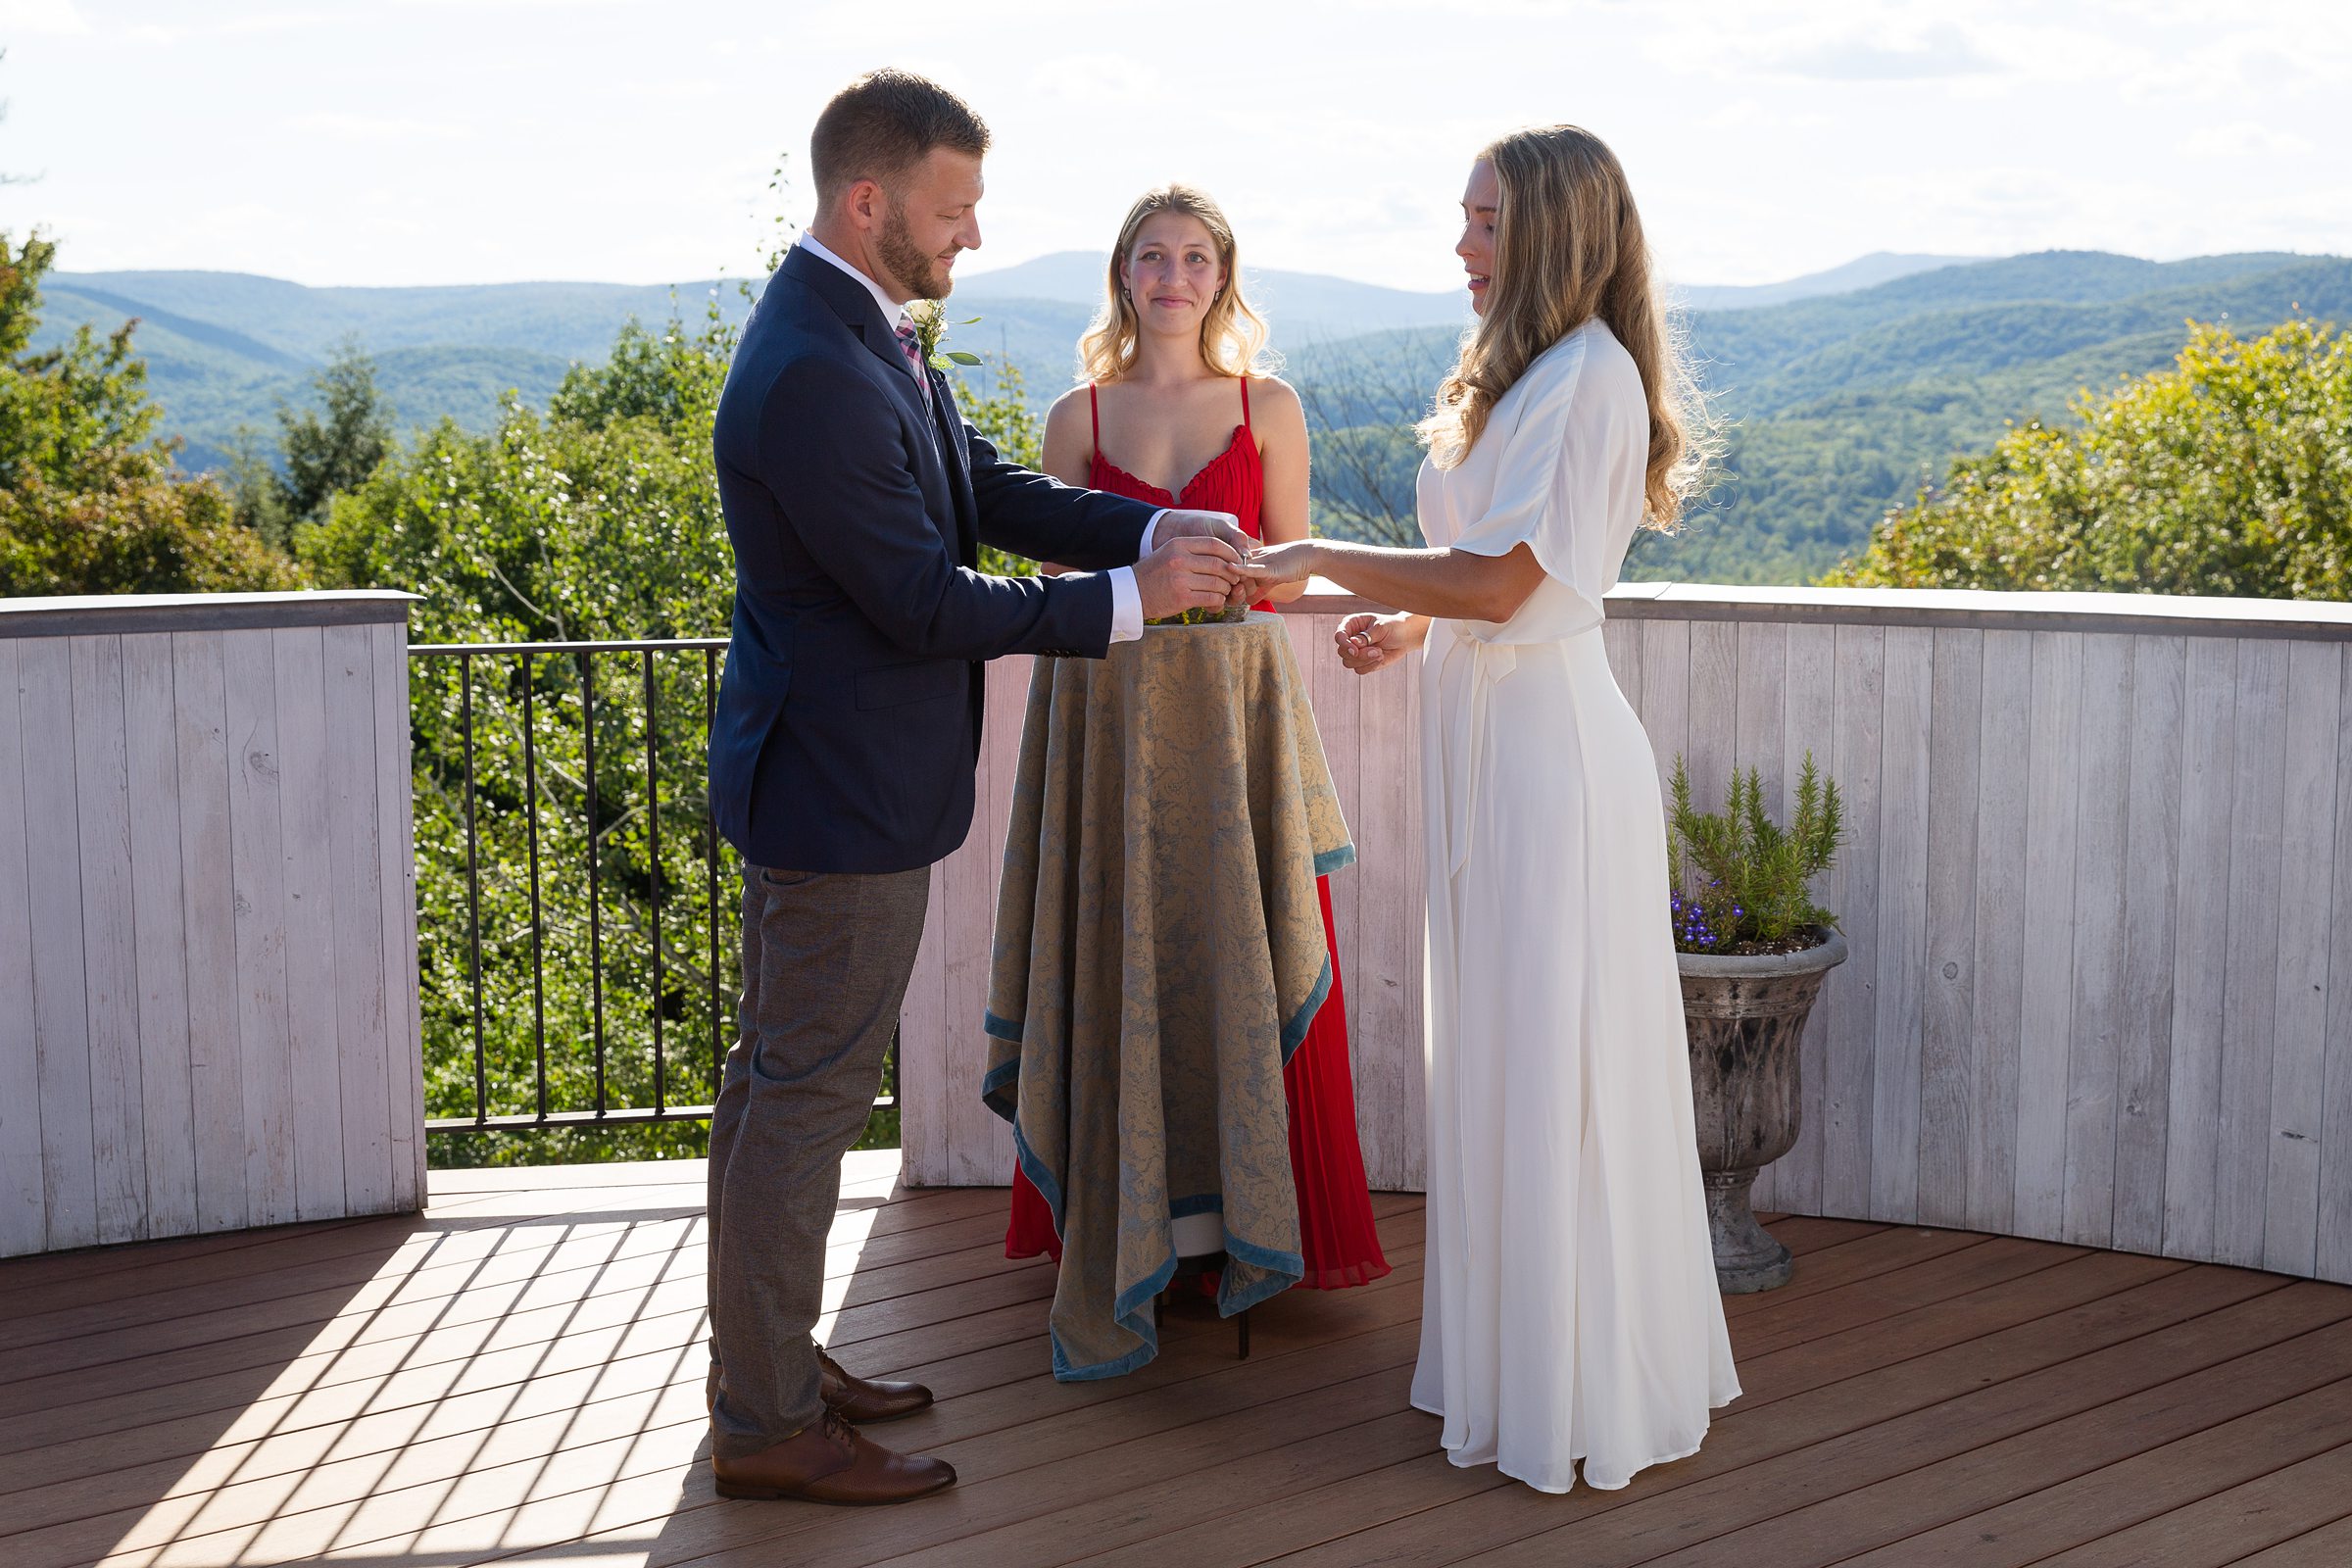 rental home wedding in Vermont for elopement 